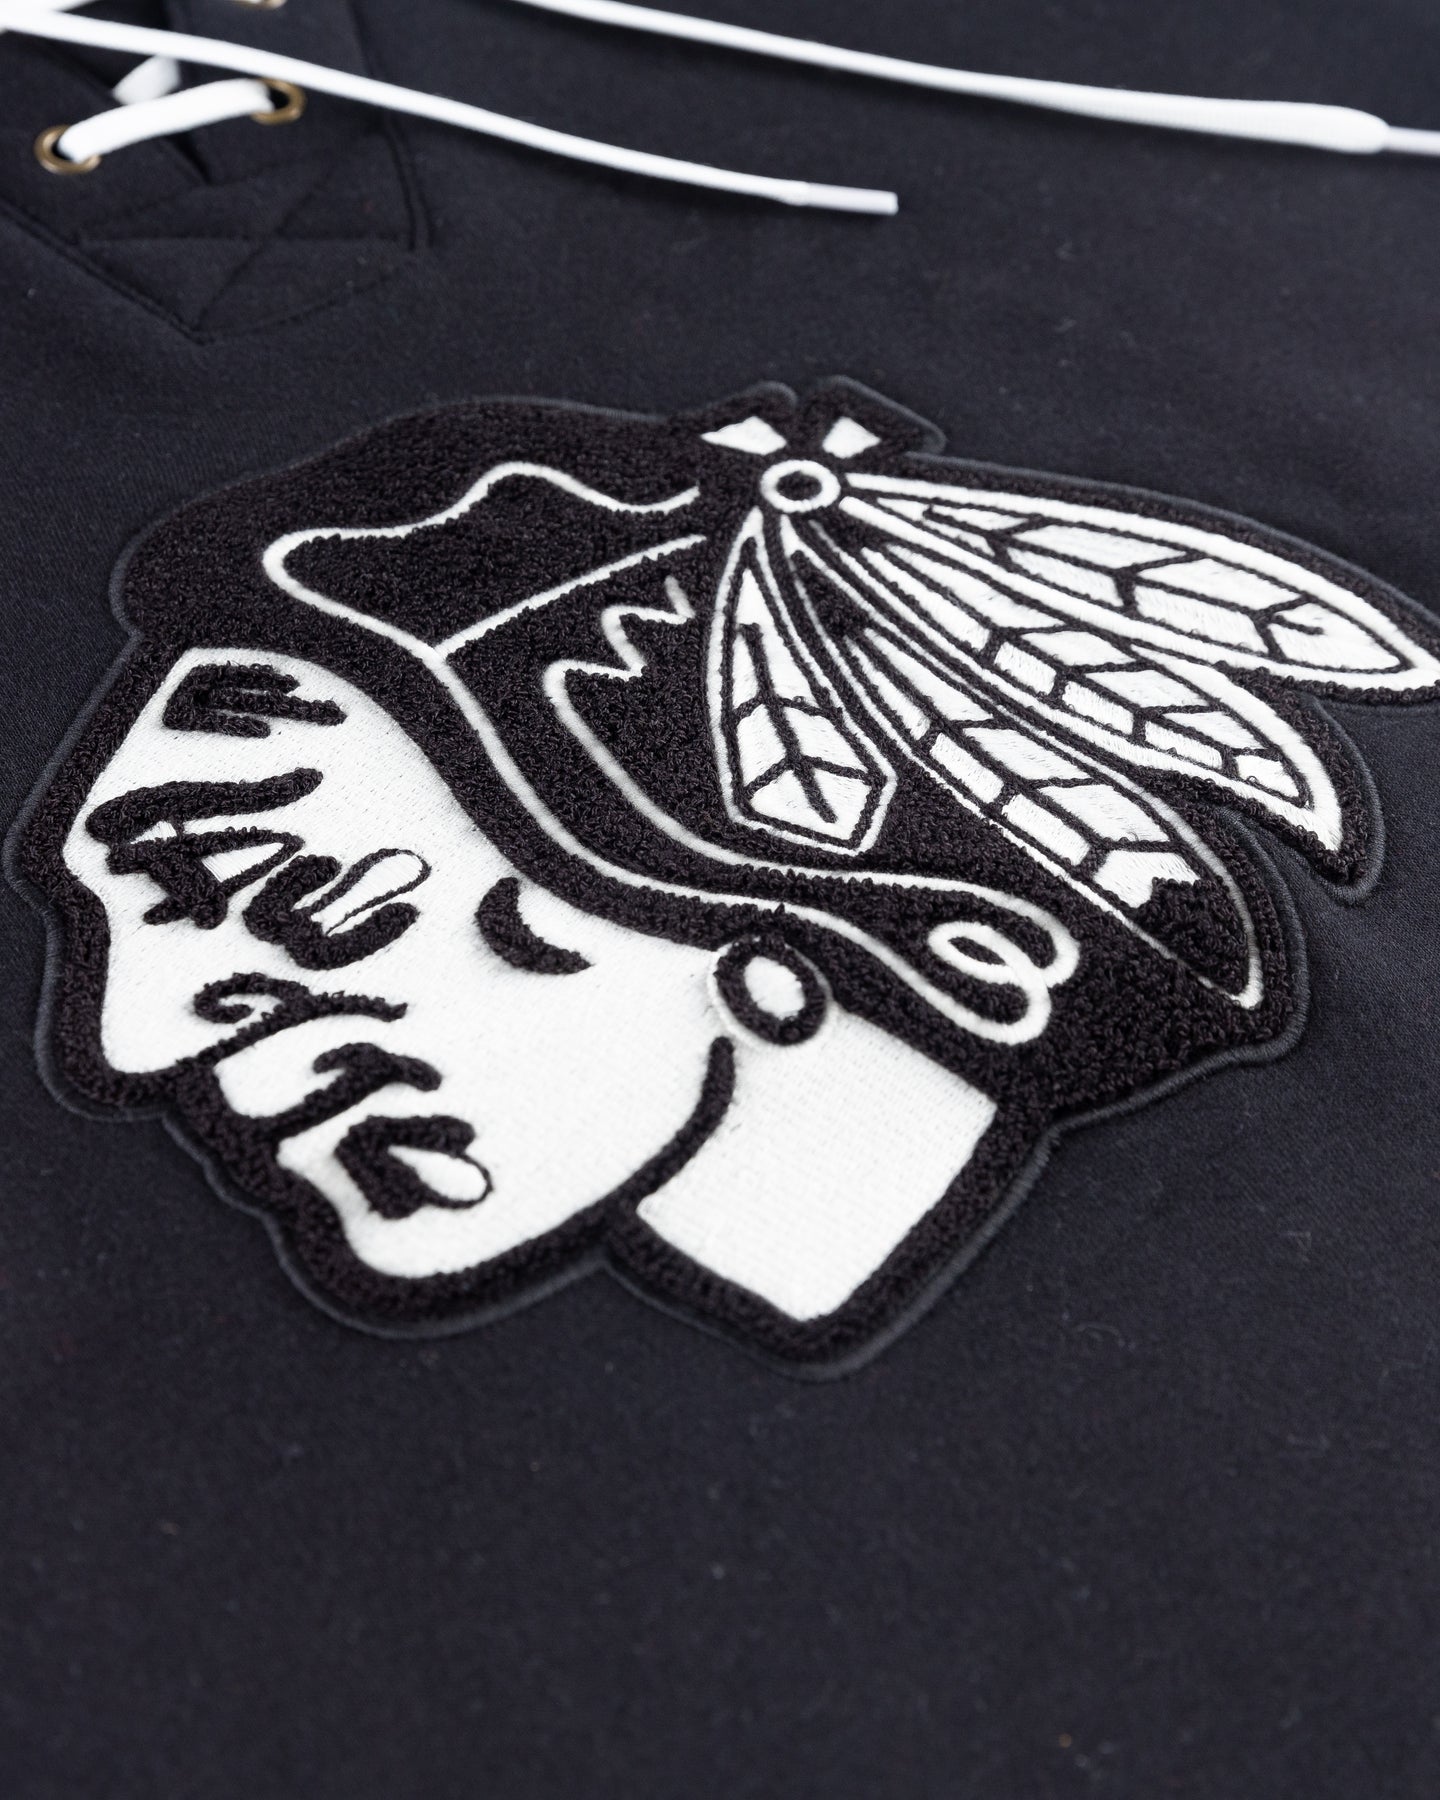 Travis Mathew Men's golf shirt Anaheim Ducks hockey logo embroidered sleeve  sz M